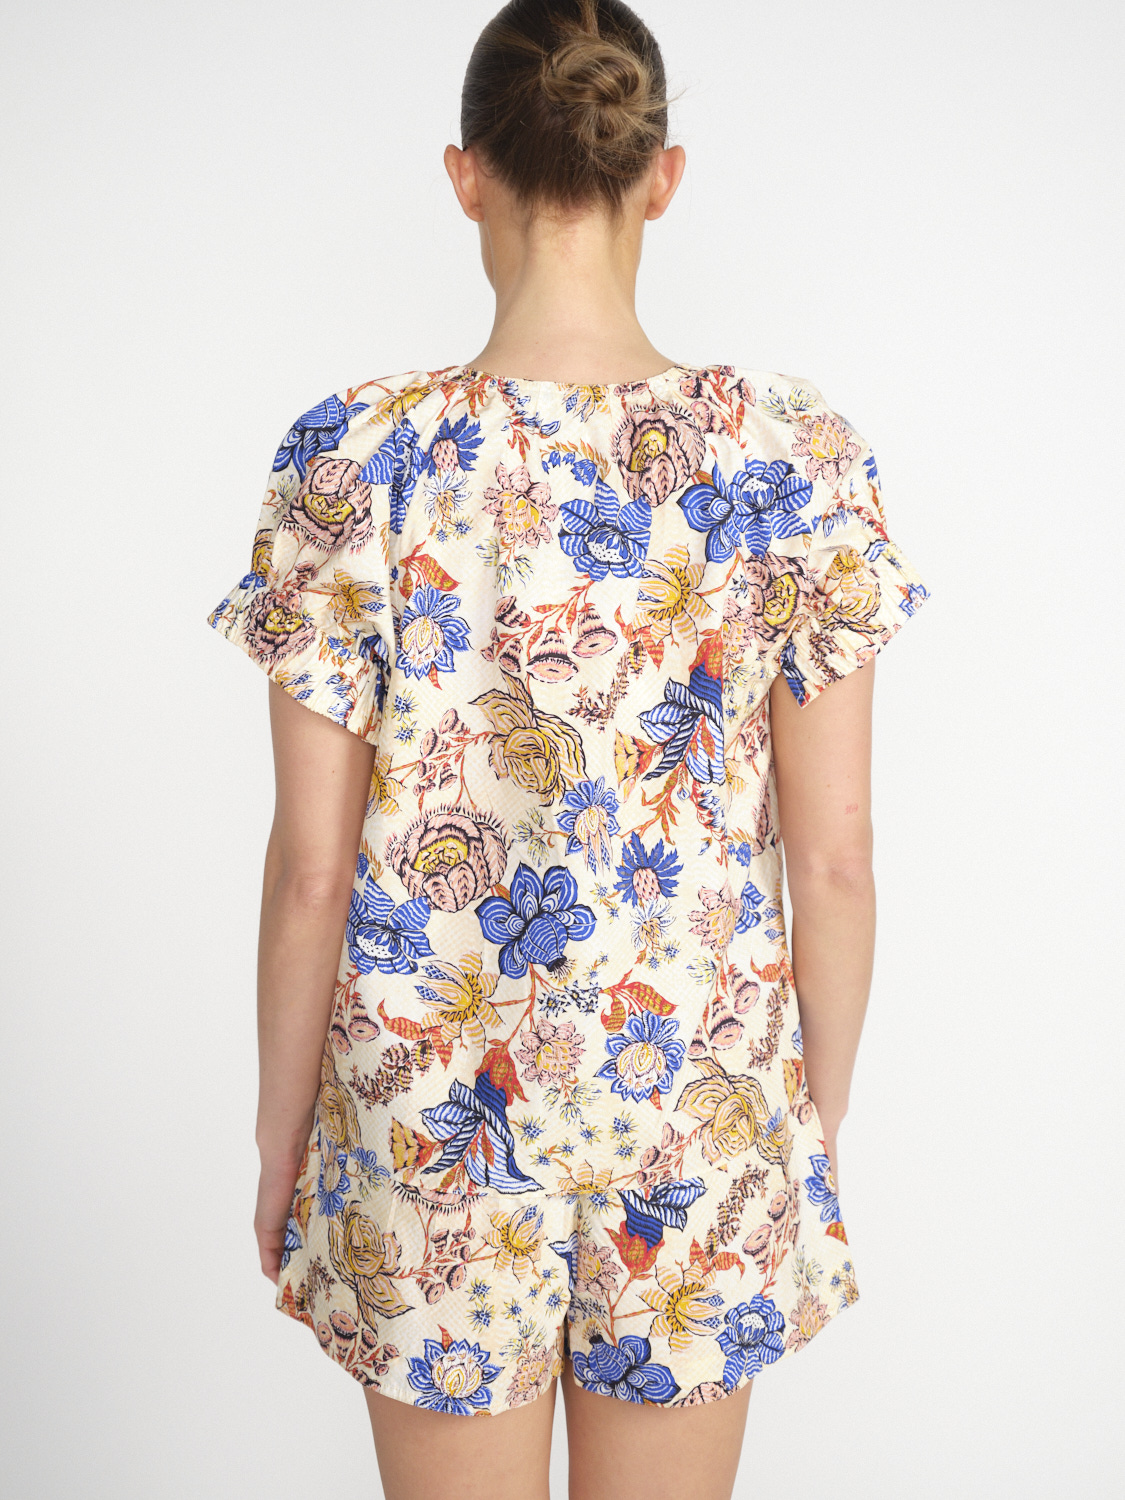 Ulla Johnson Naomi – Baumwoll-Bluse mit Blumen-Design   multicolor 36